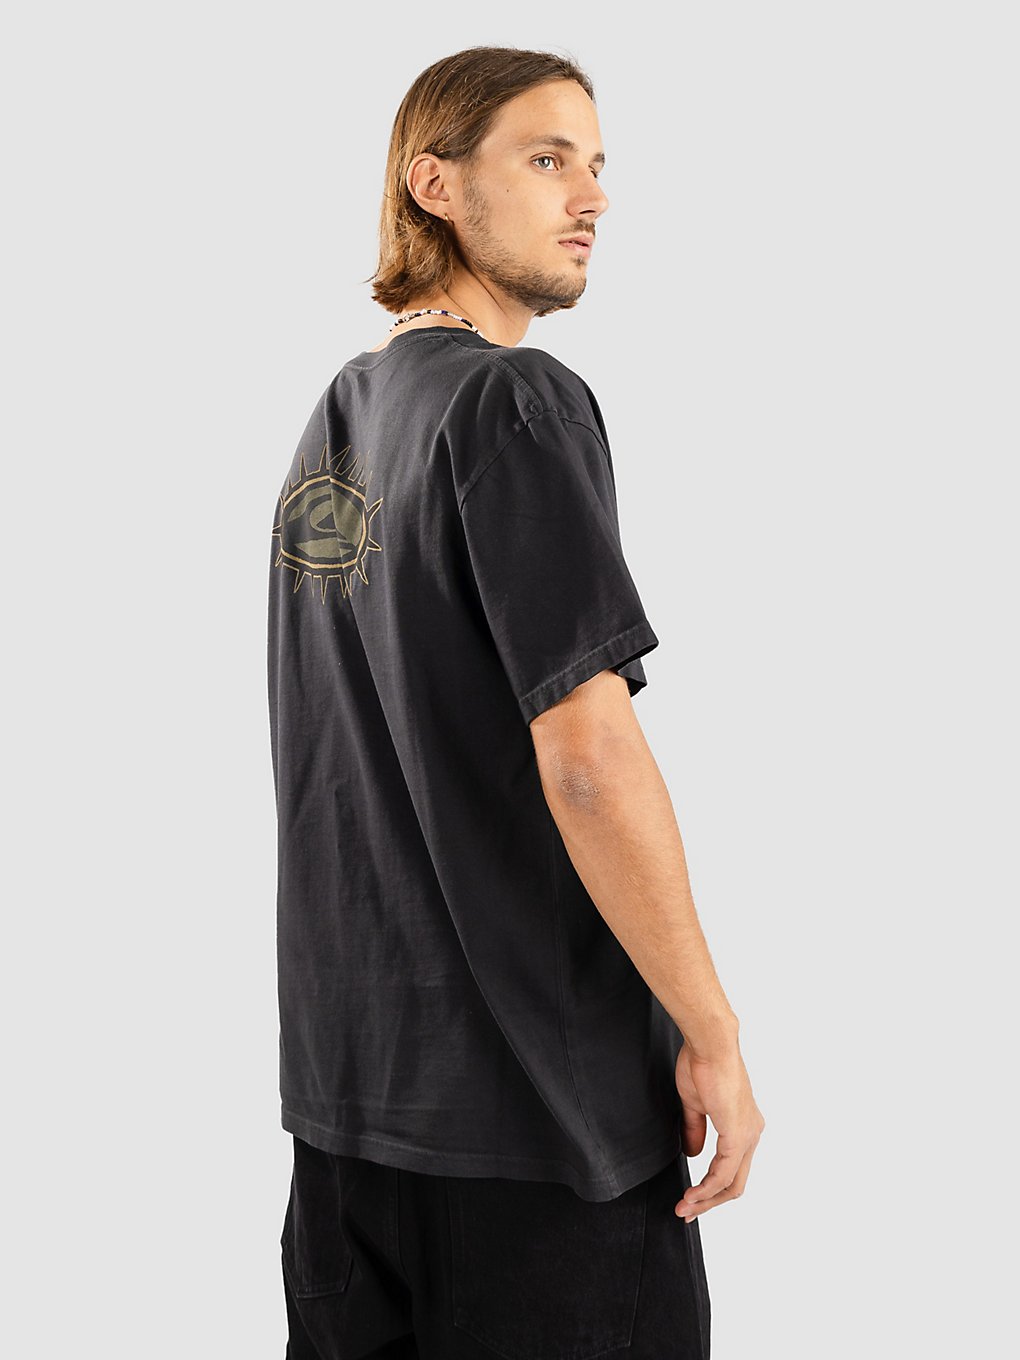 Quiksilver Mongrel 1 T-Shirt black kaufen